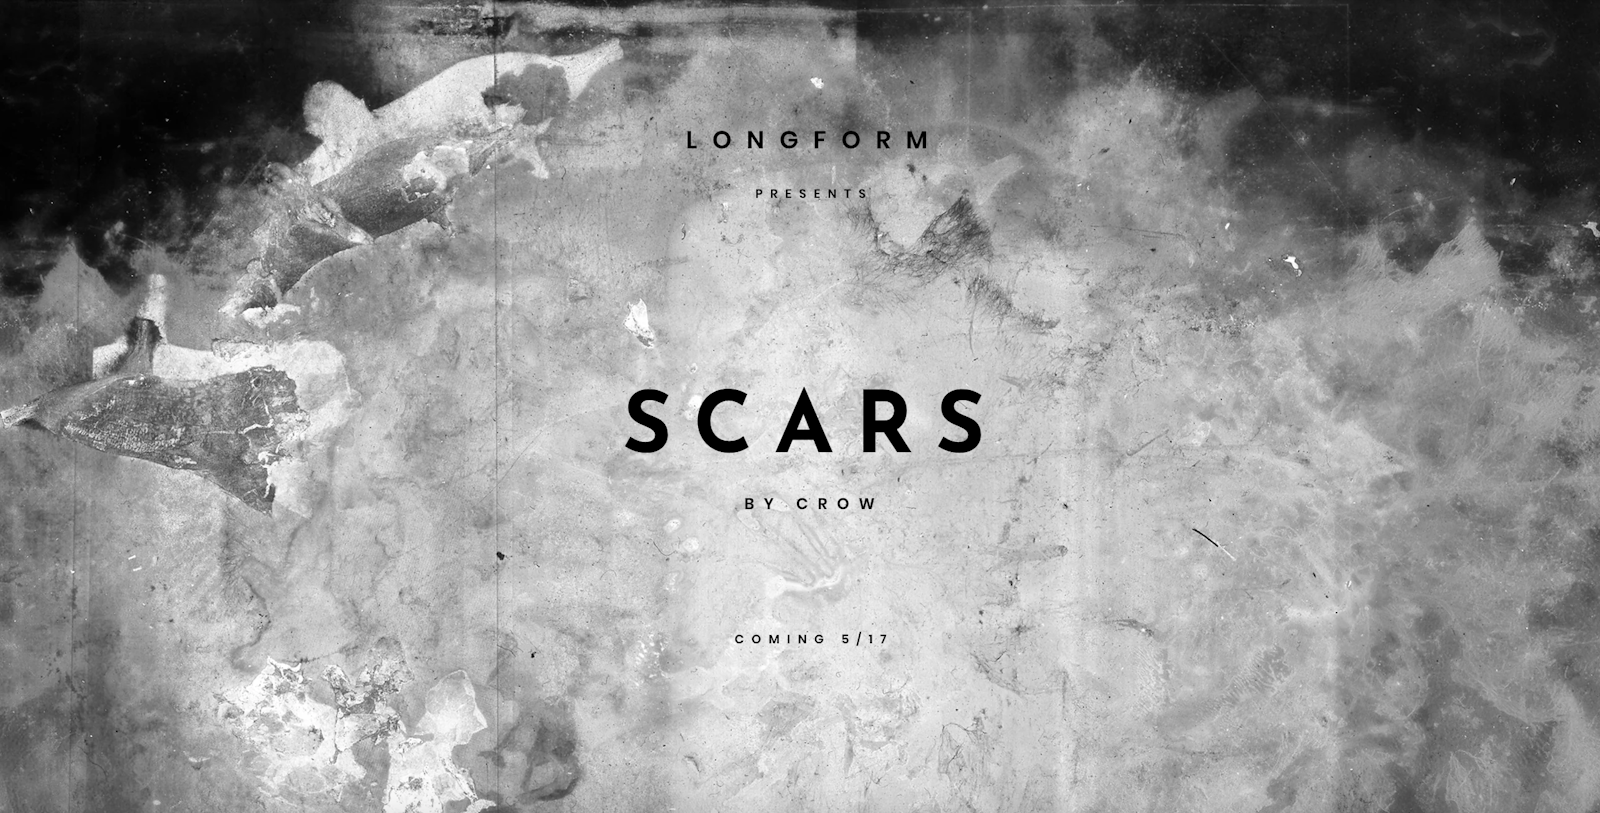 Longform: Scars by Crow